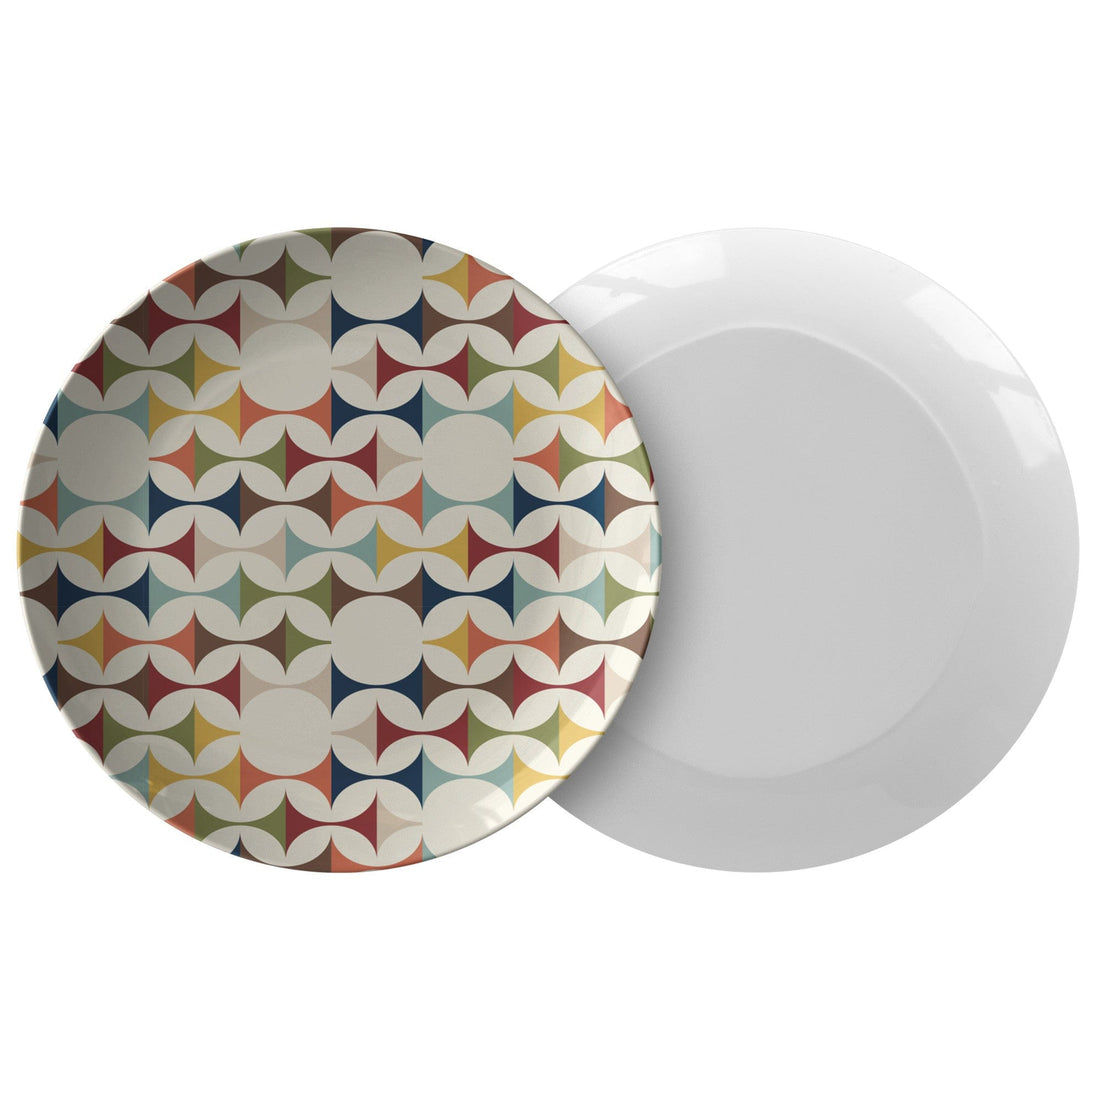 Kate McEnroe New York Retro Mid Century Modern Geometric Dinner Plate in Cream, Teal, Mustard, and Rust Plates Single 9820SINGLE